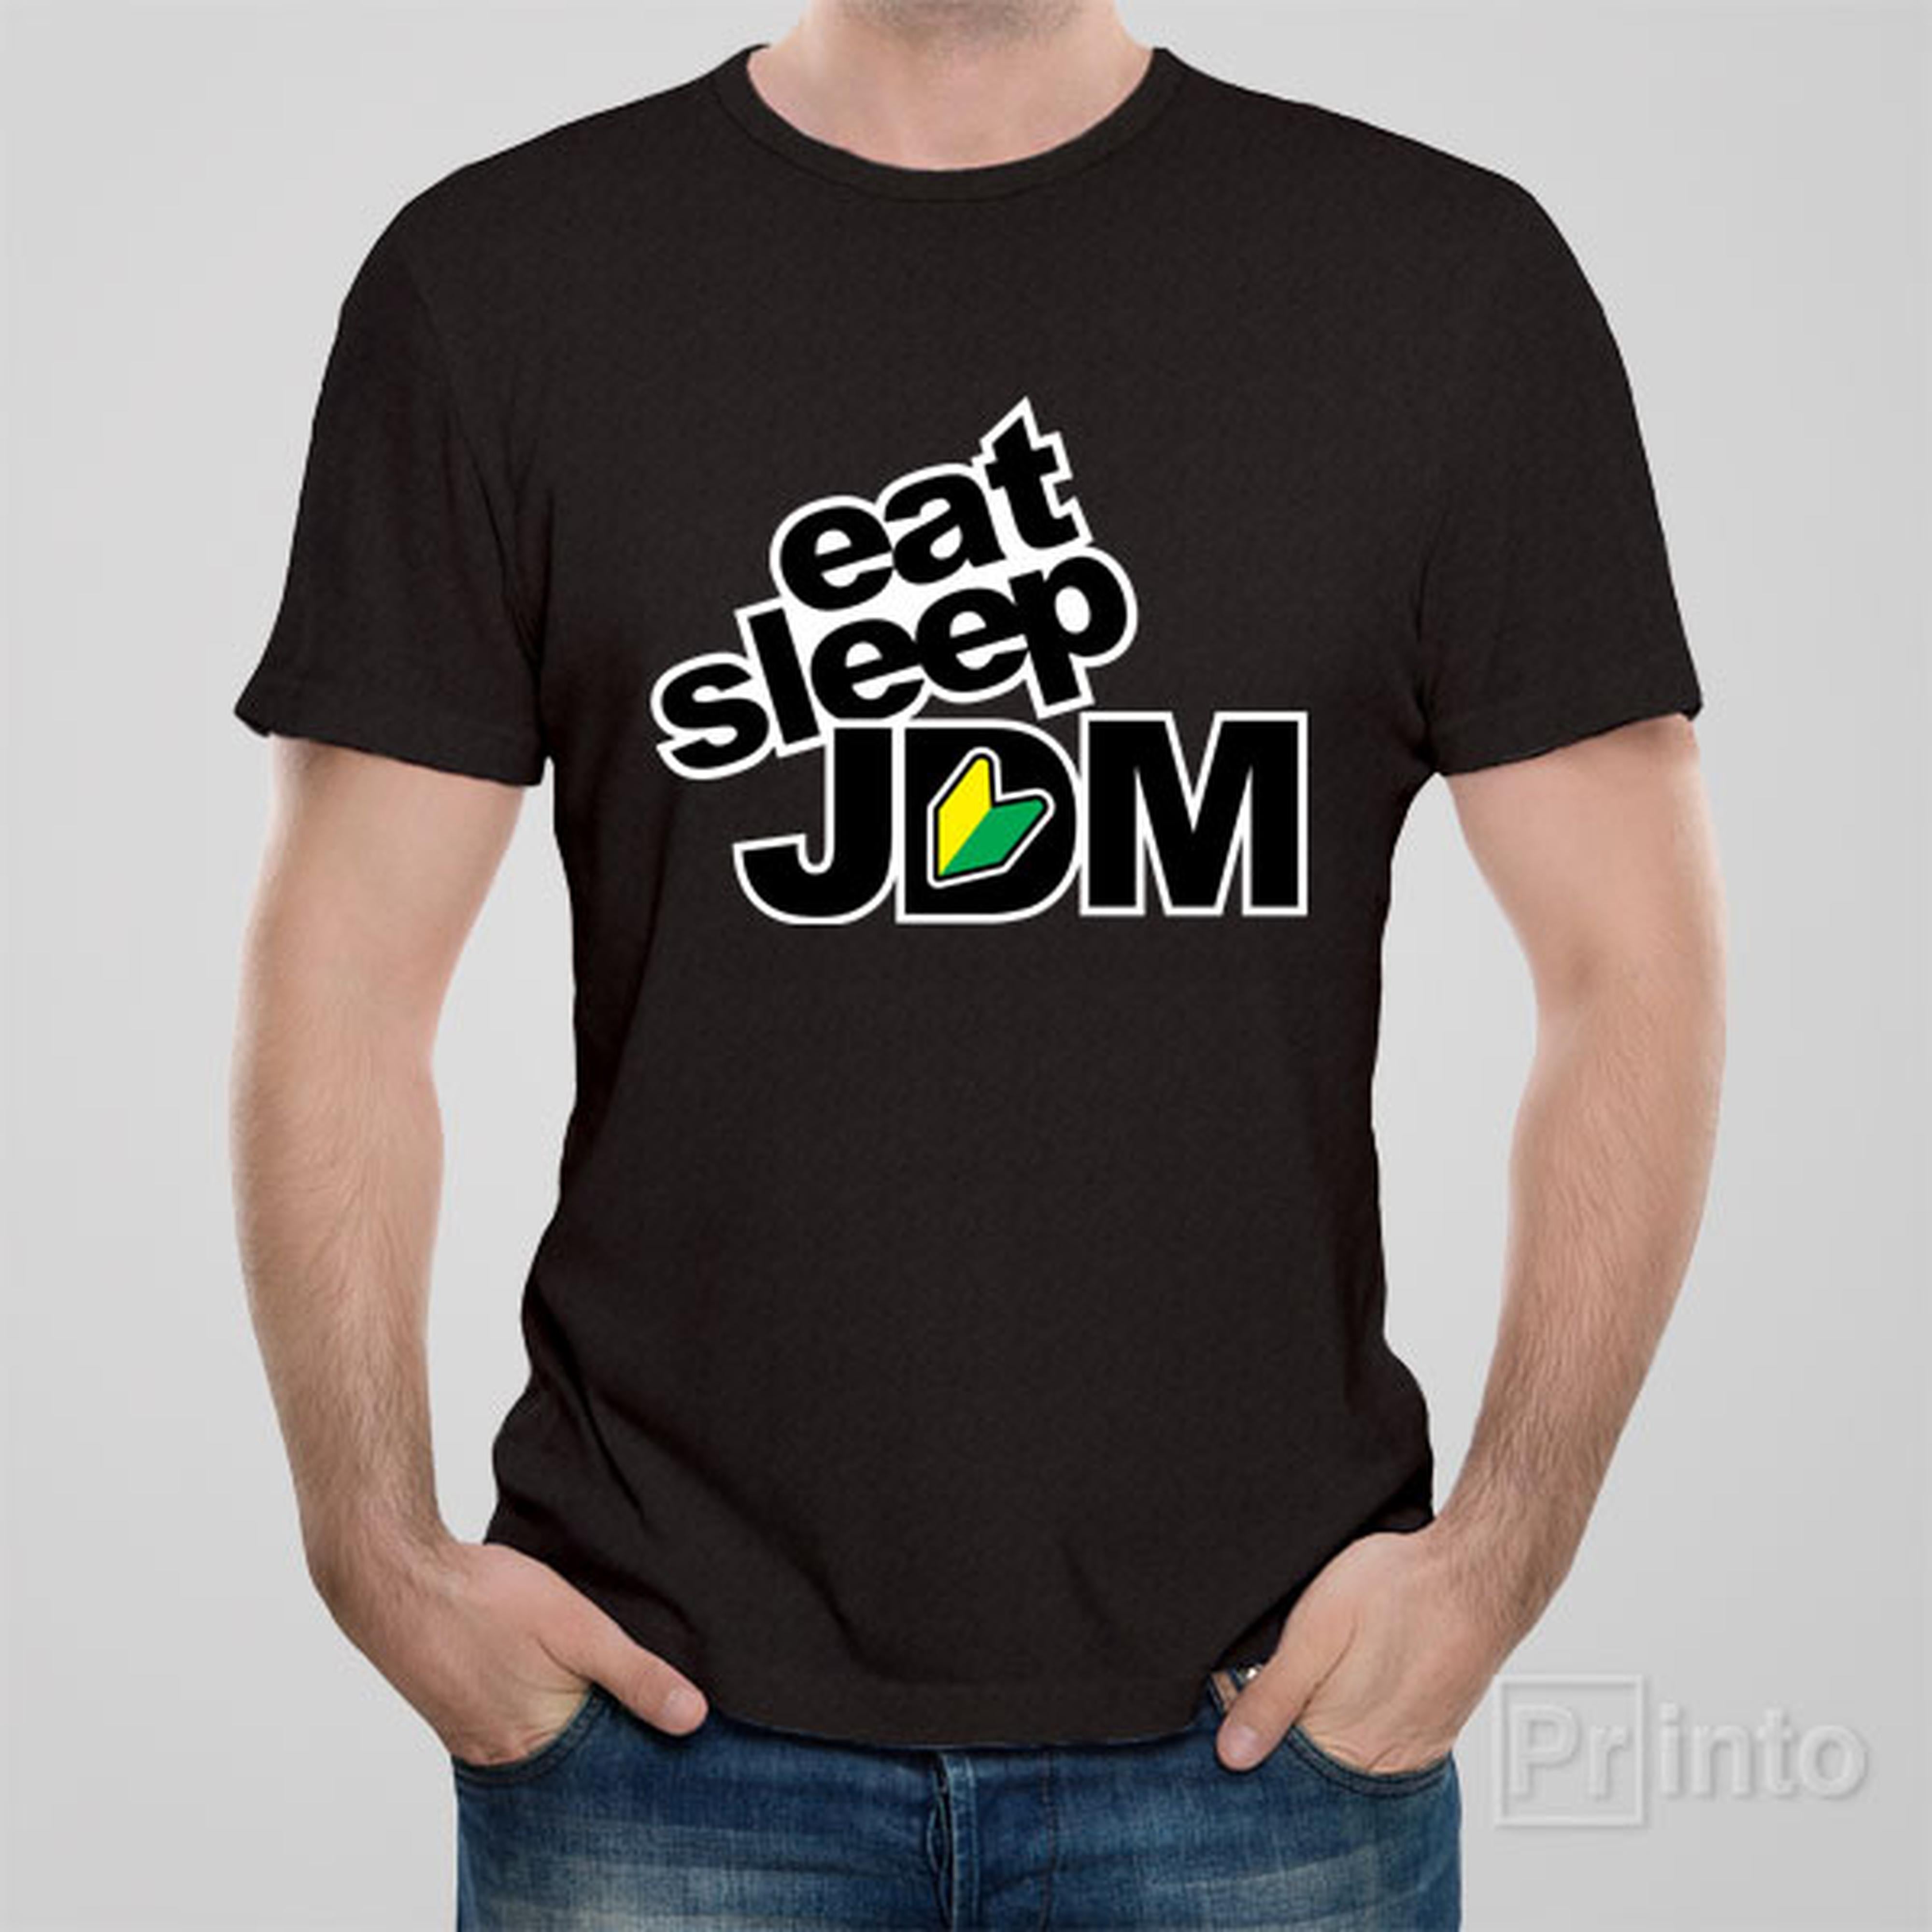 eat-sleep-jdm-t-shirt